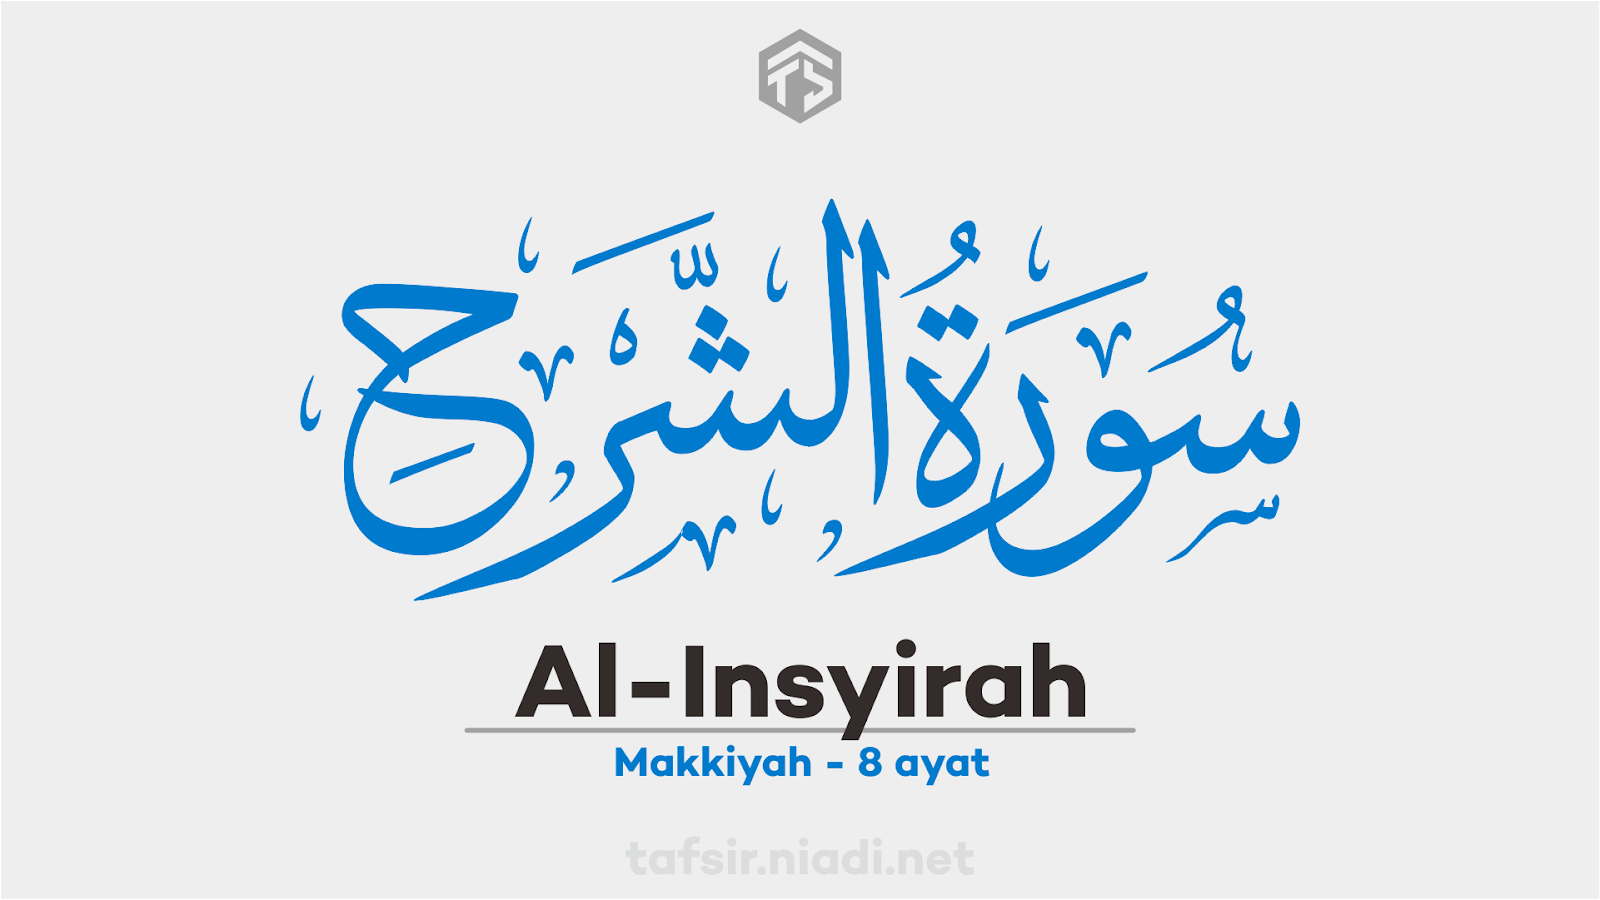 Tafsir Alquran Surah Al-Insyirah Ayat ke-7. Website Alquran online cepat, ringan, dan hemat kuota, lengkap dengan teks arab, latin, terjemah, dan tafsir bahasa Indonesia - tafsir.niadi.net